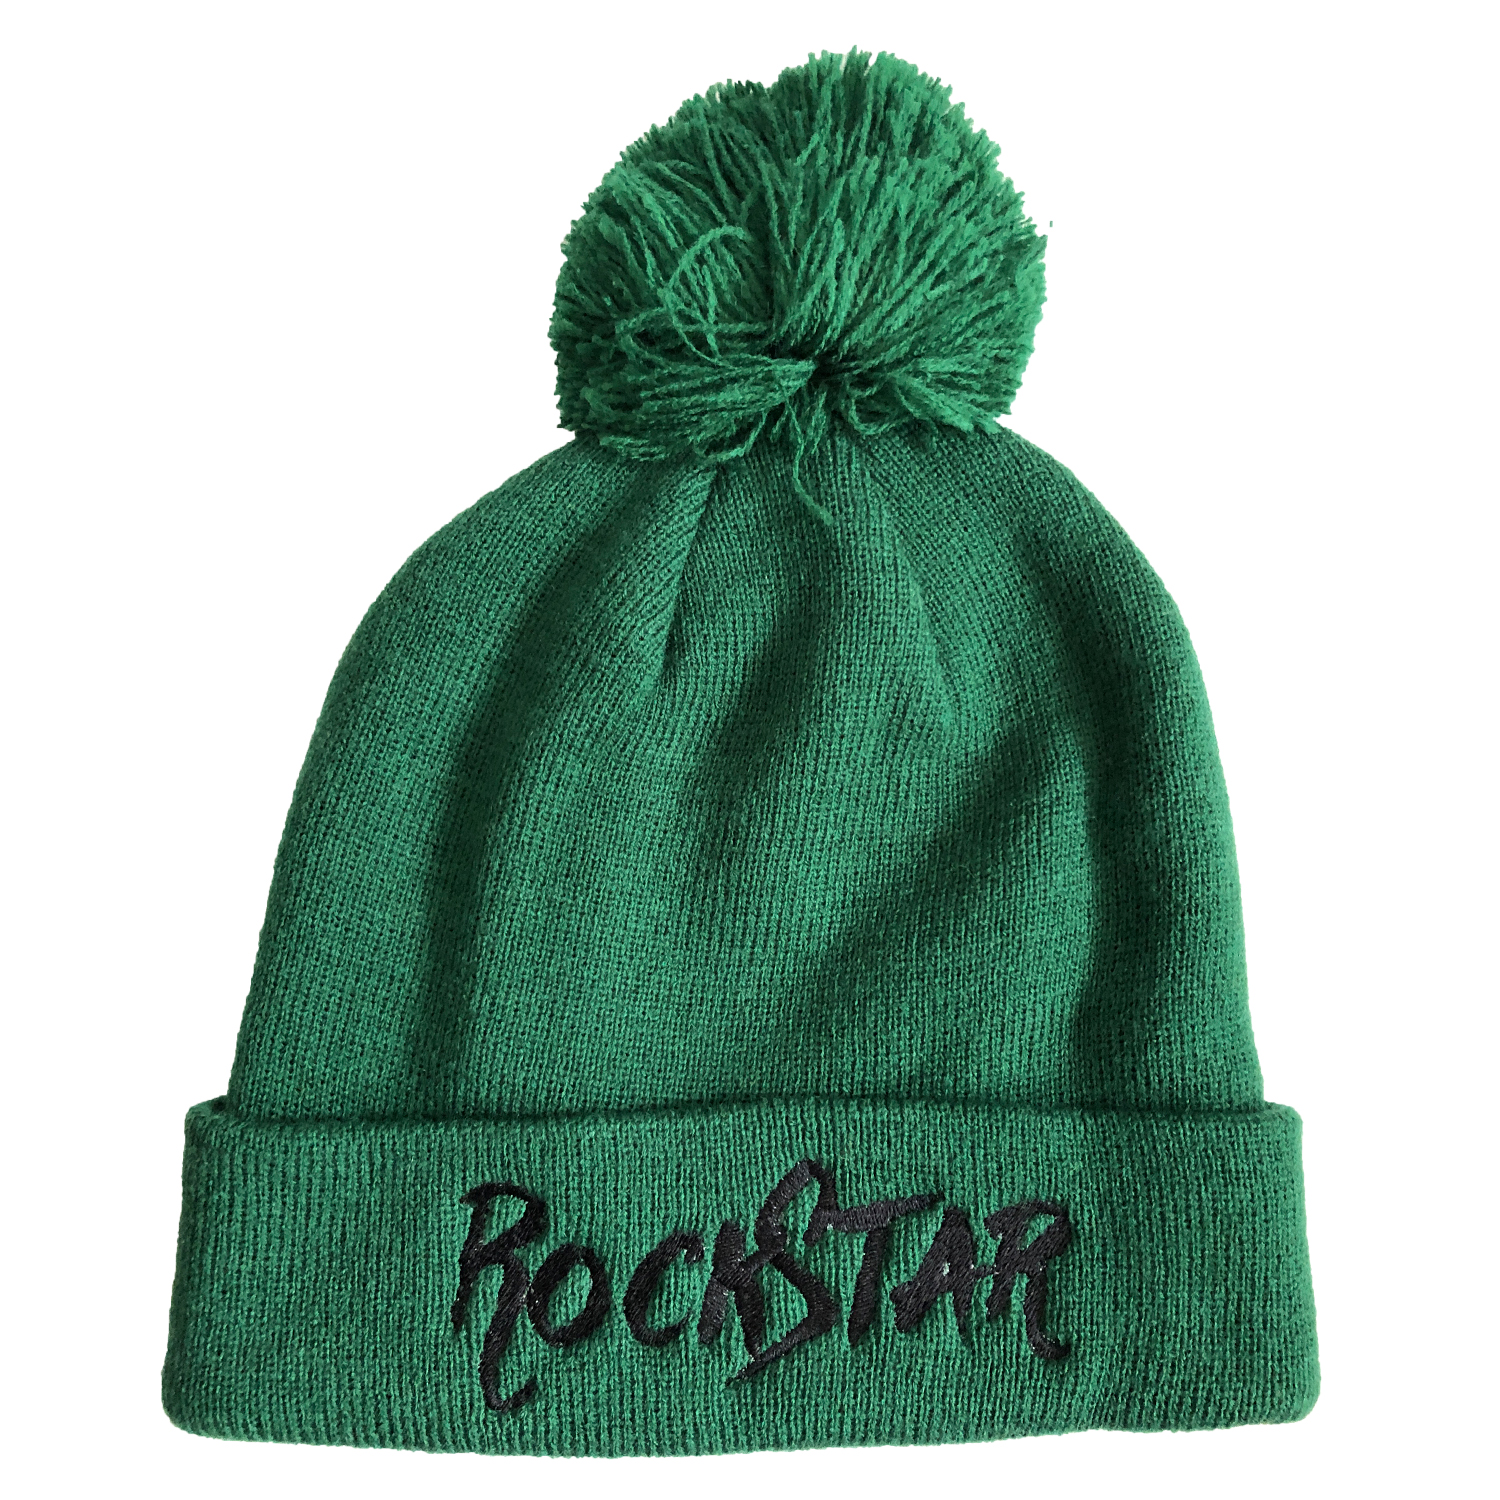 Beau Tyler - RockStar winter knit hat dark green front - maybe temp